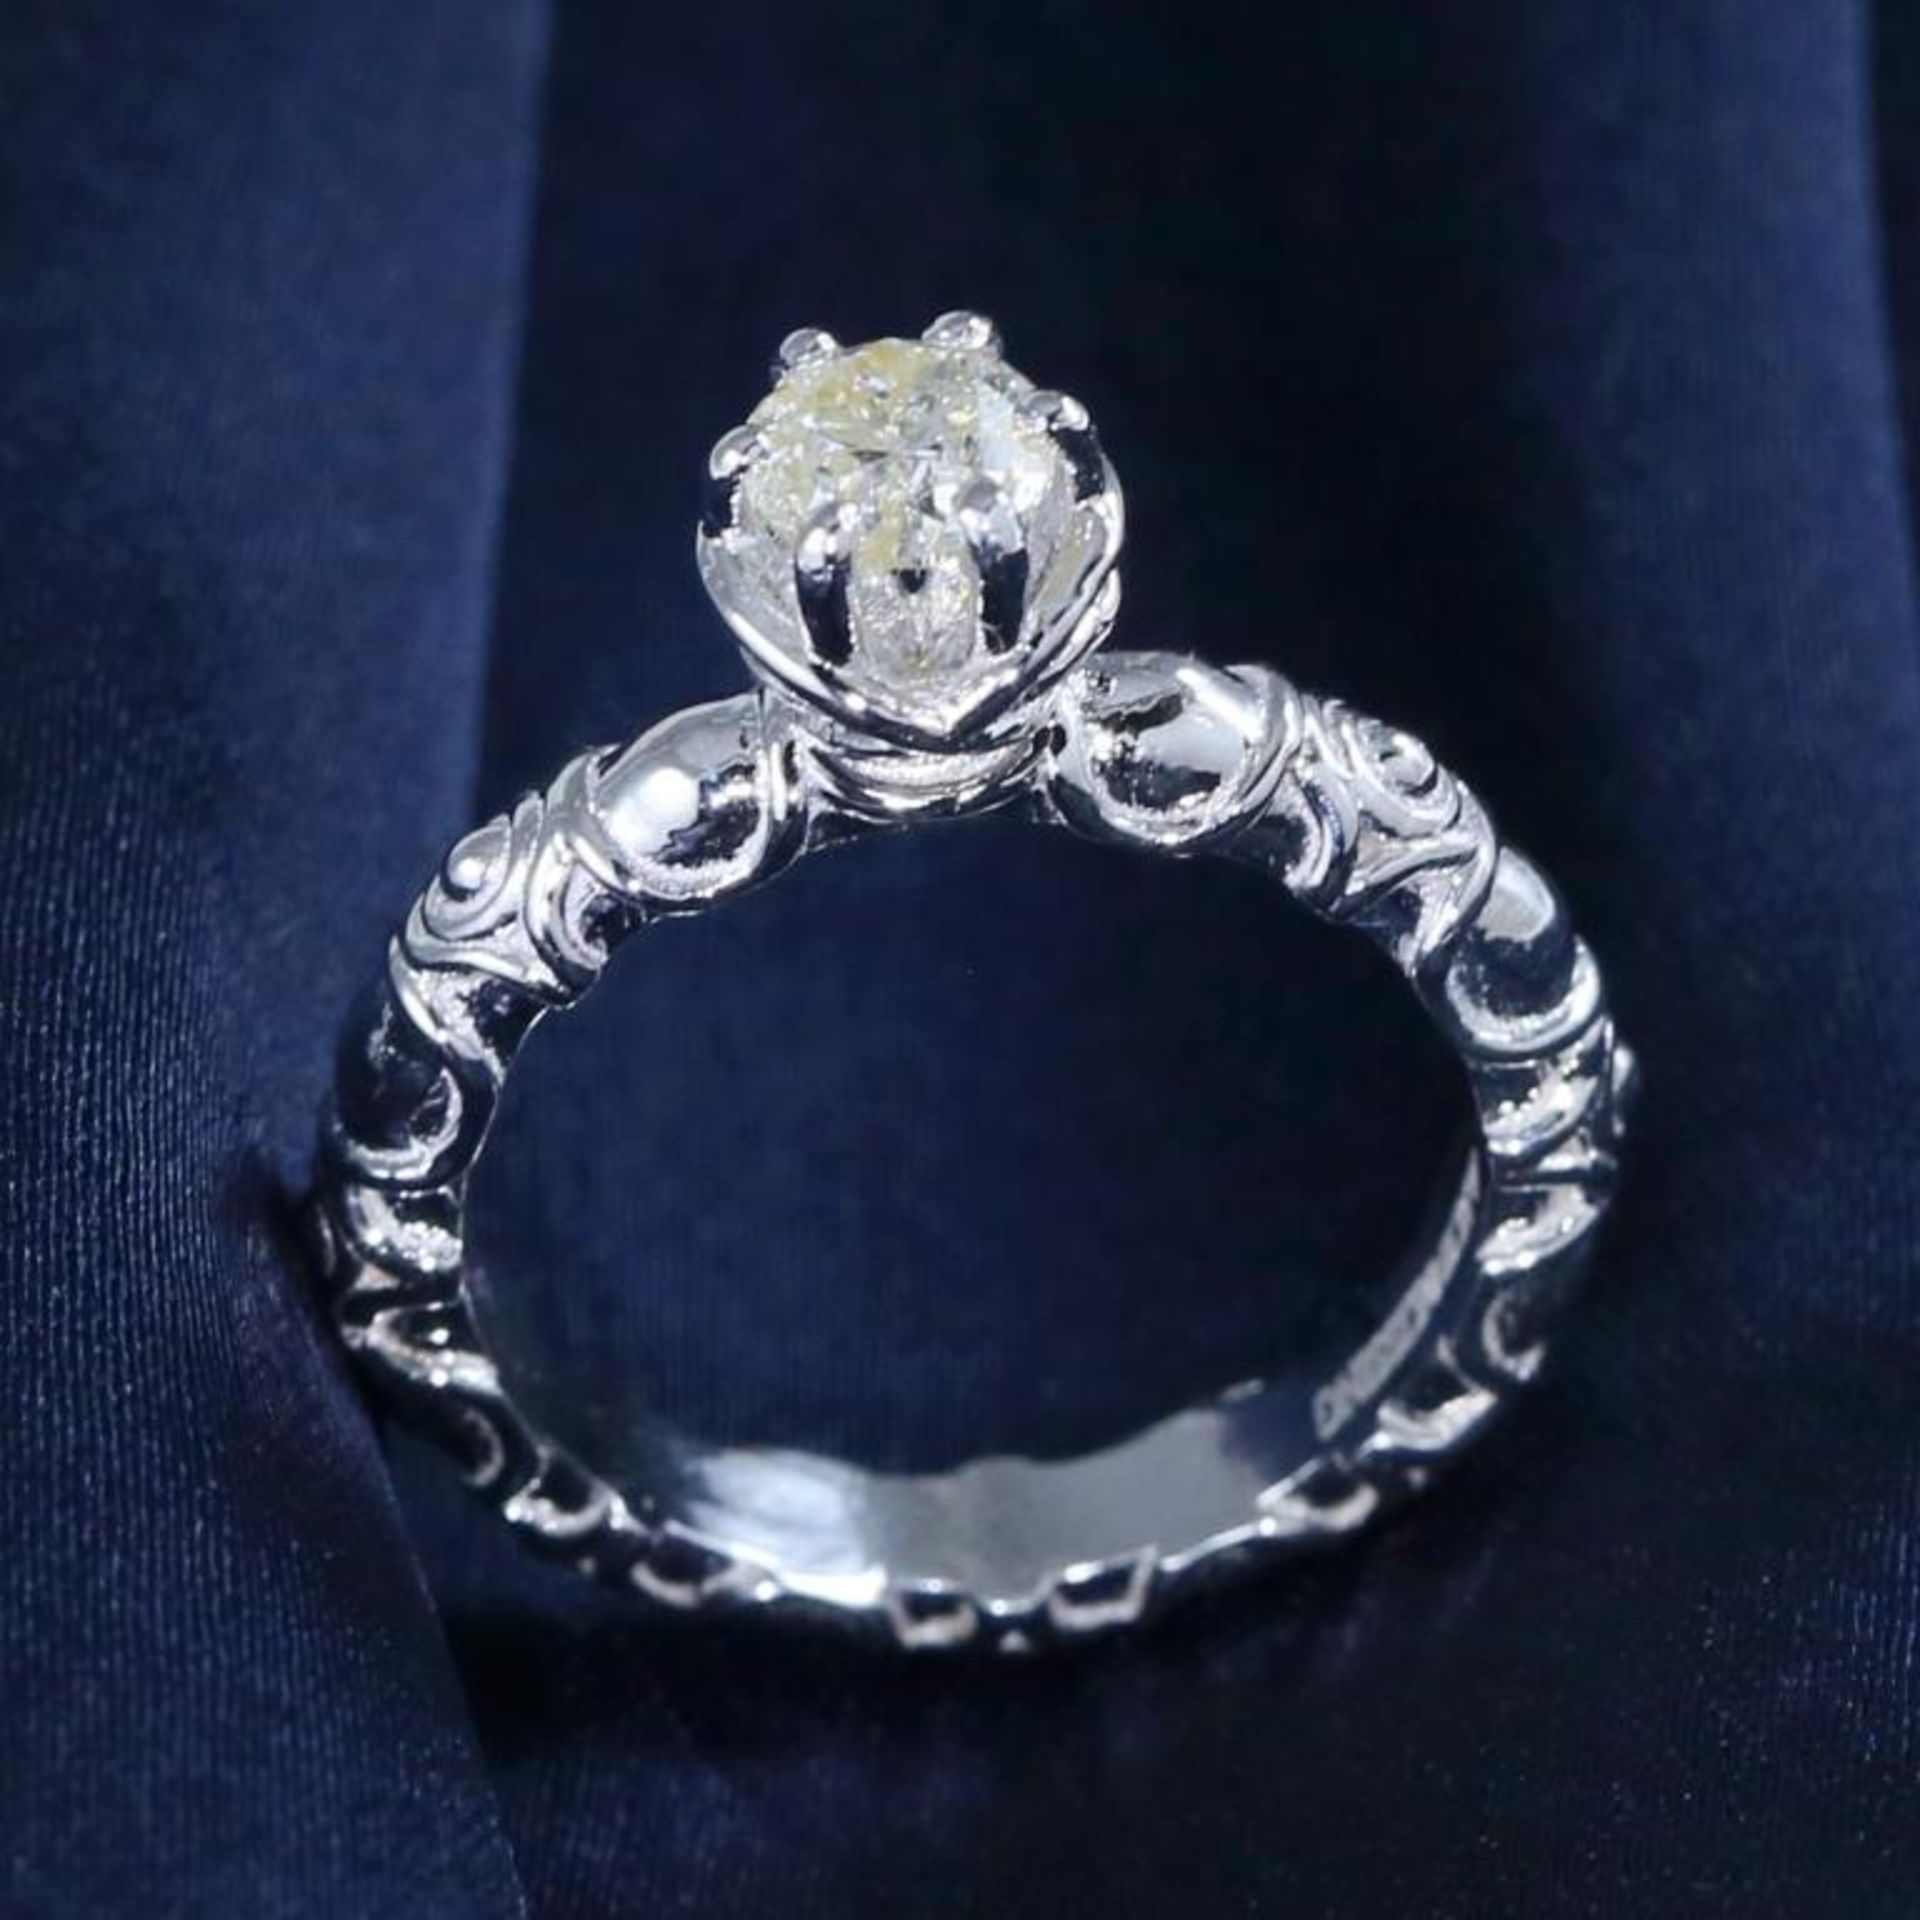 14 K White Gold Certified Designer Solitaire Diamond Ring - Image 3 of 8